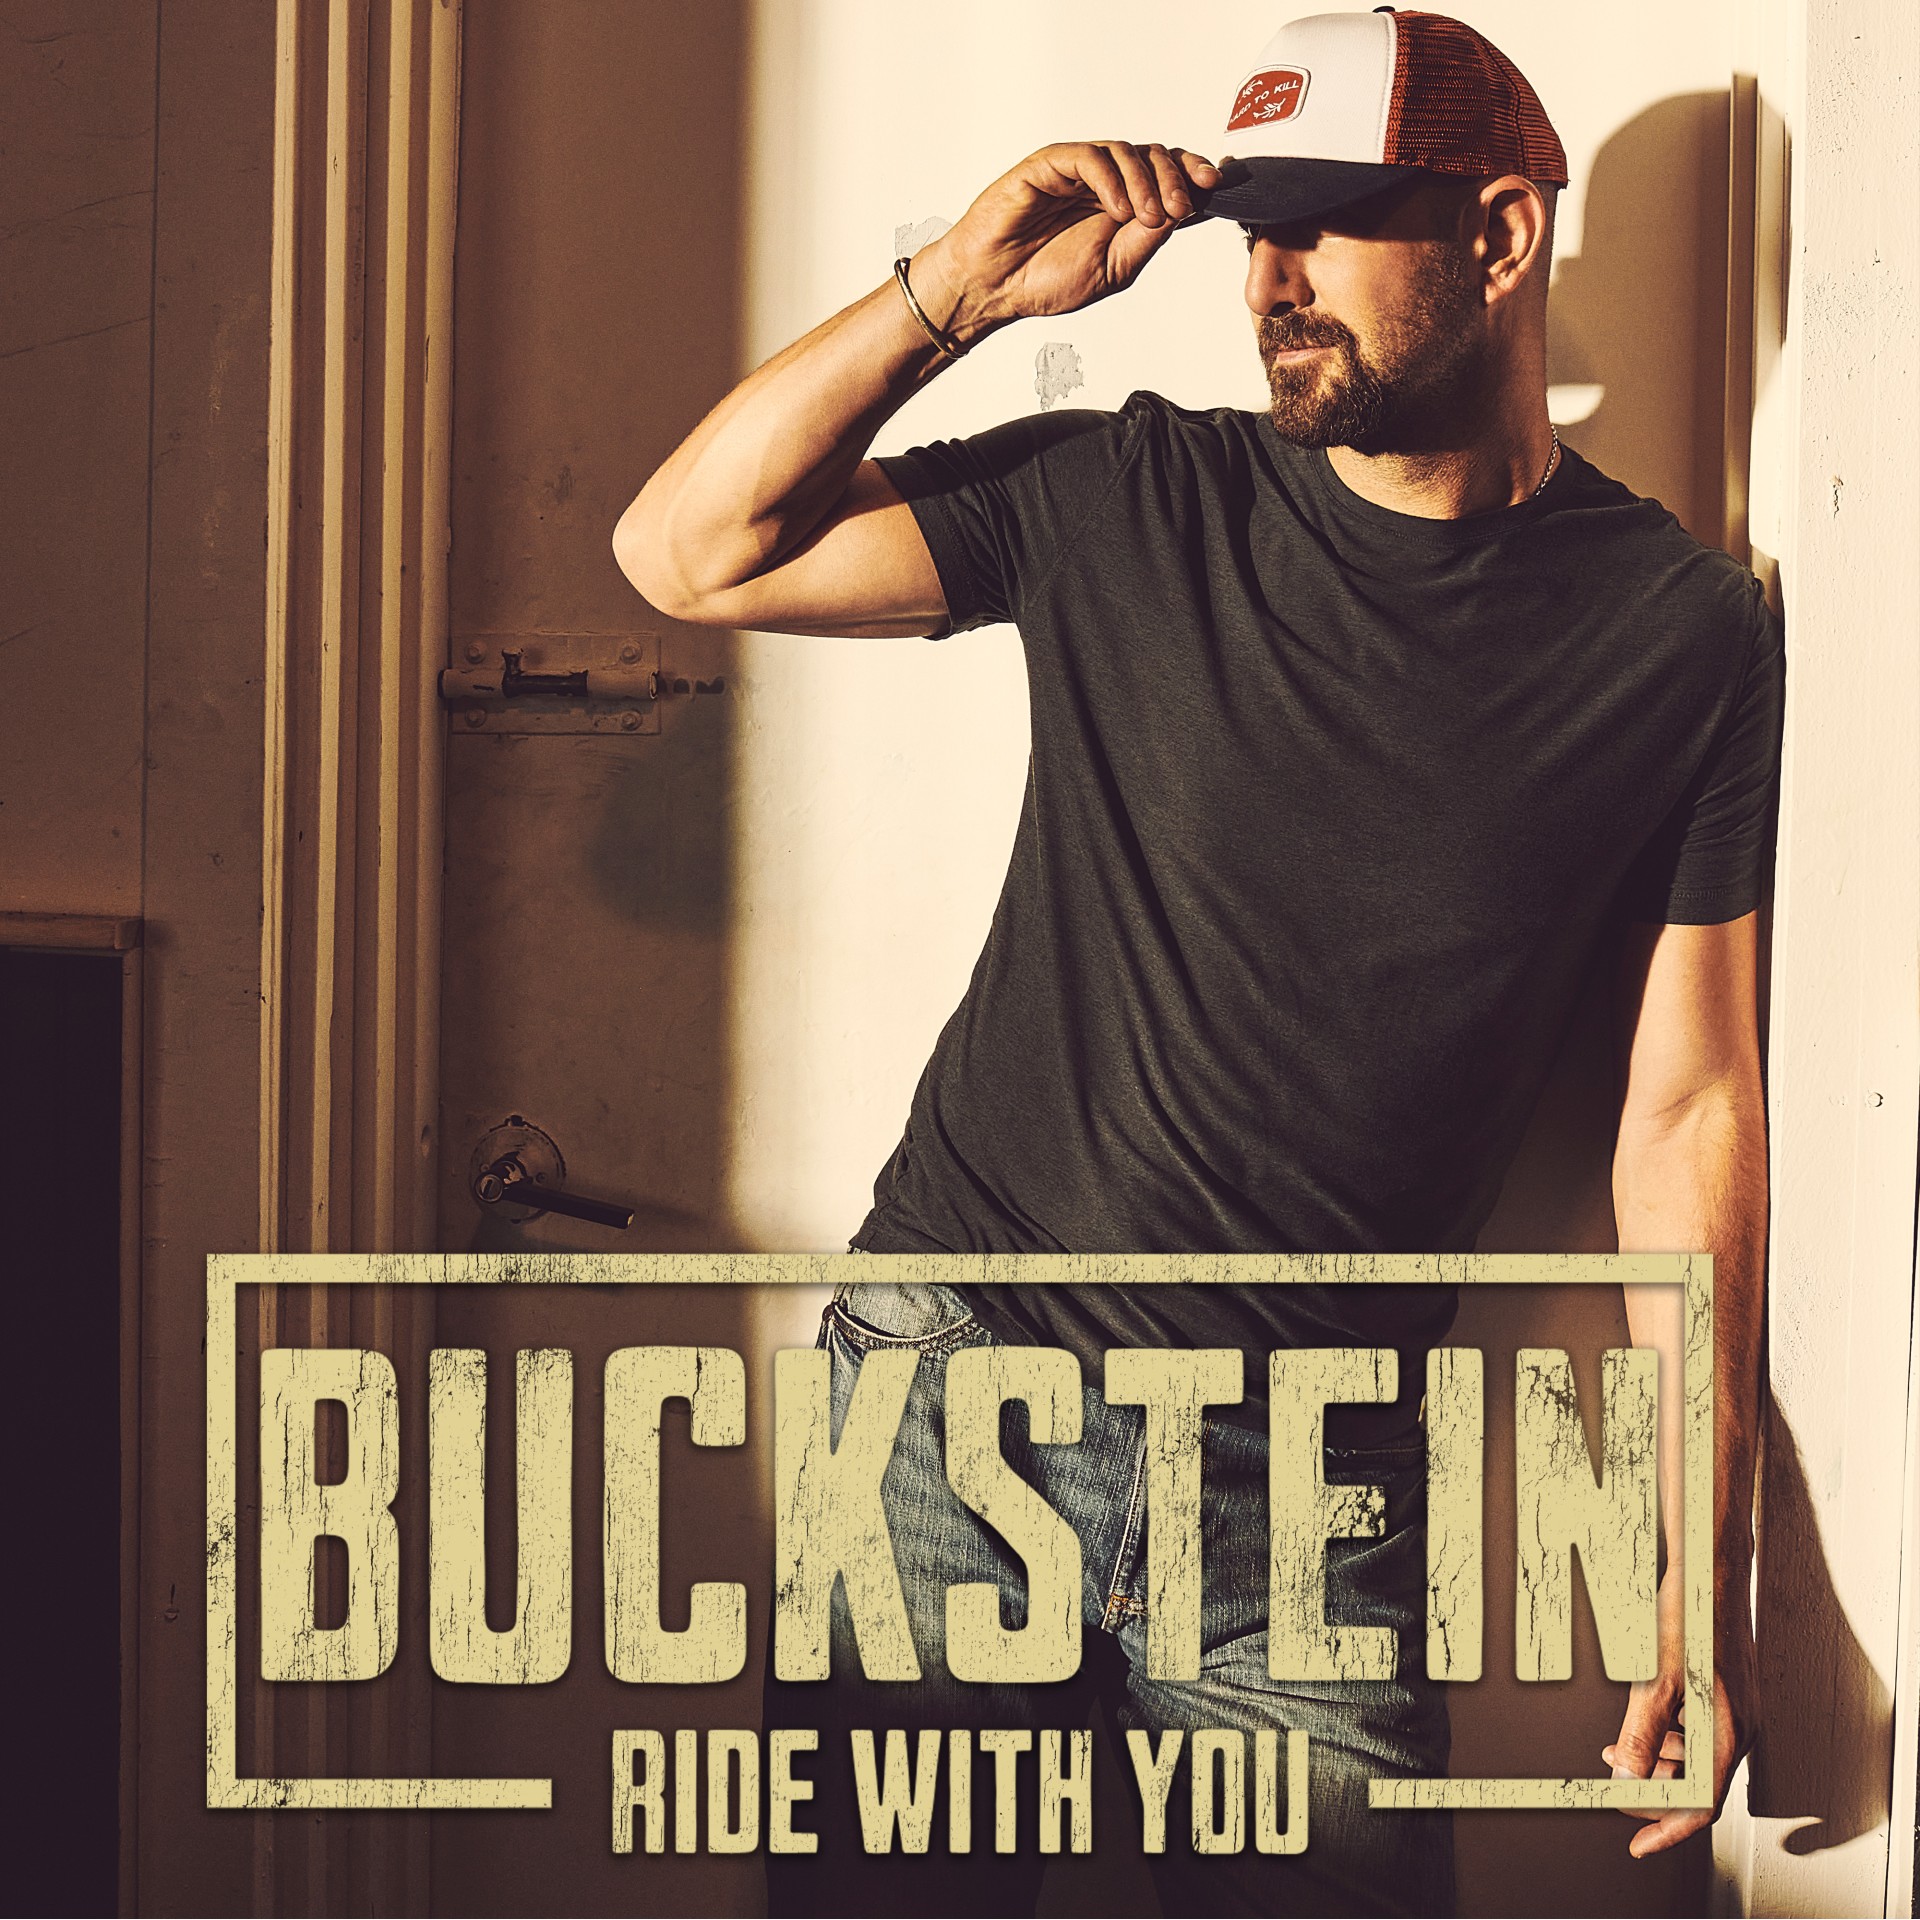 Buckstein “Ride with You” single artwork